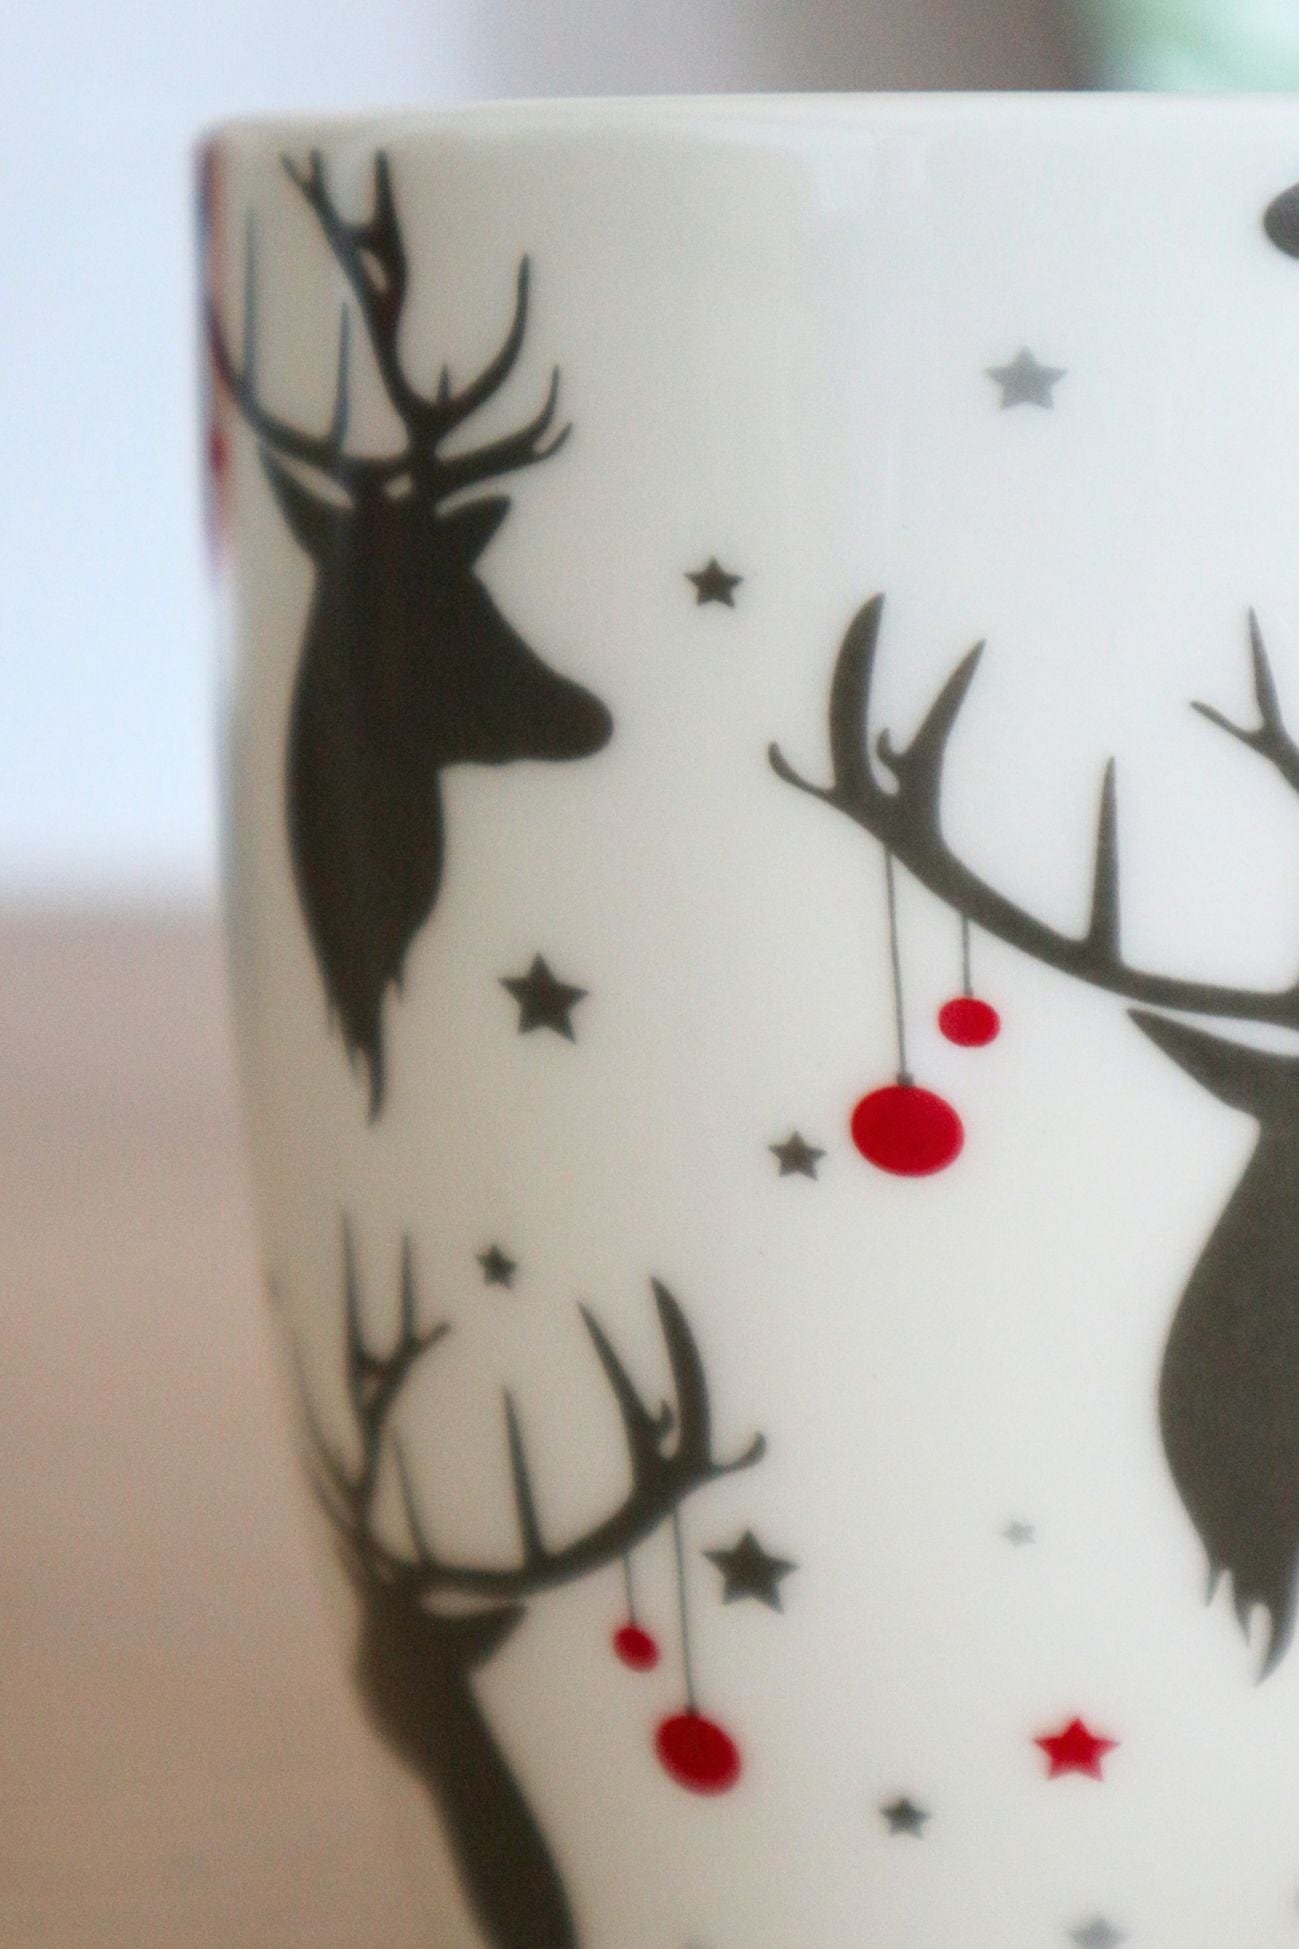 Item International Rudolph Rudolph - Tazza natalizia in porcellana bianca con renne 360ml | Item International